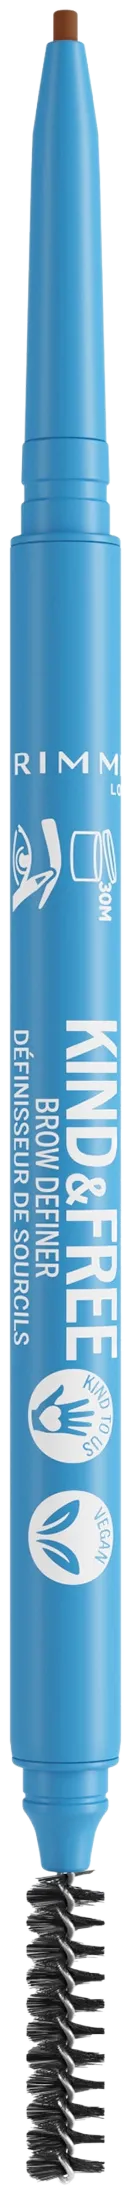 Rimmel Kind & Free Dual Ended Brow Definer 0,09 g 002 Taupe, kulmakynä - Taupe - 2